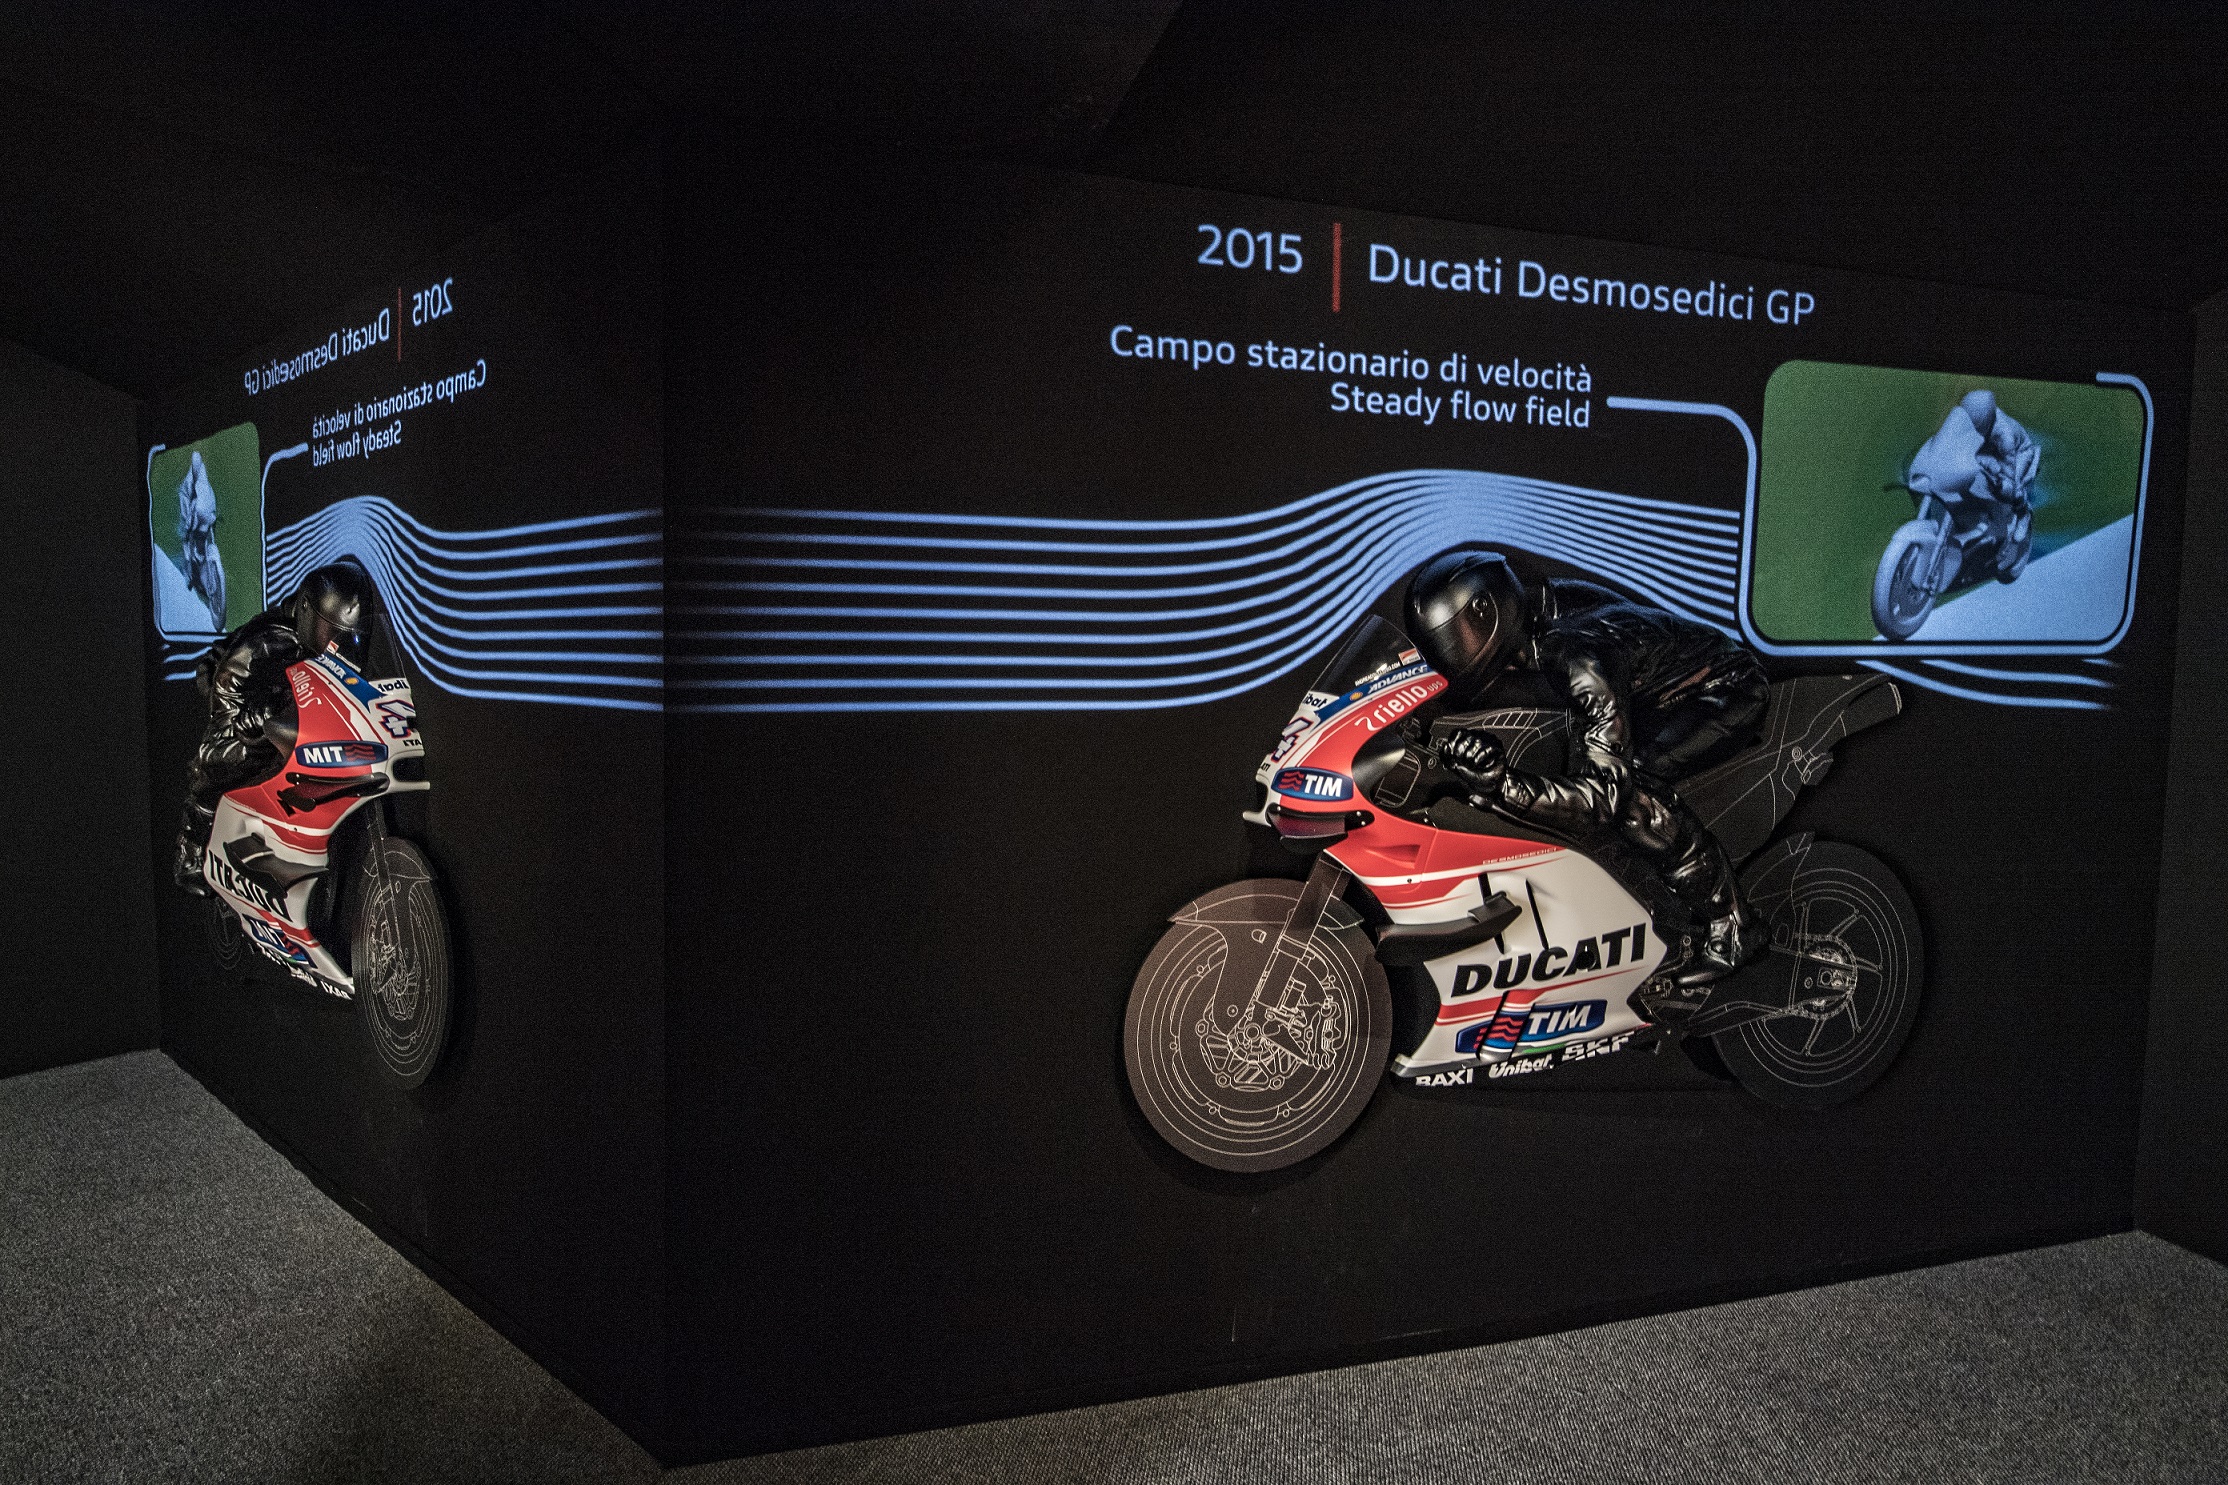 ducati-anatomy of speed exhibition-uae-dubai